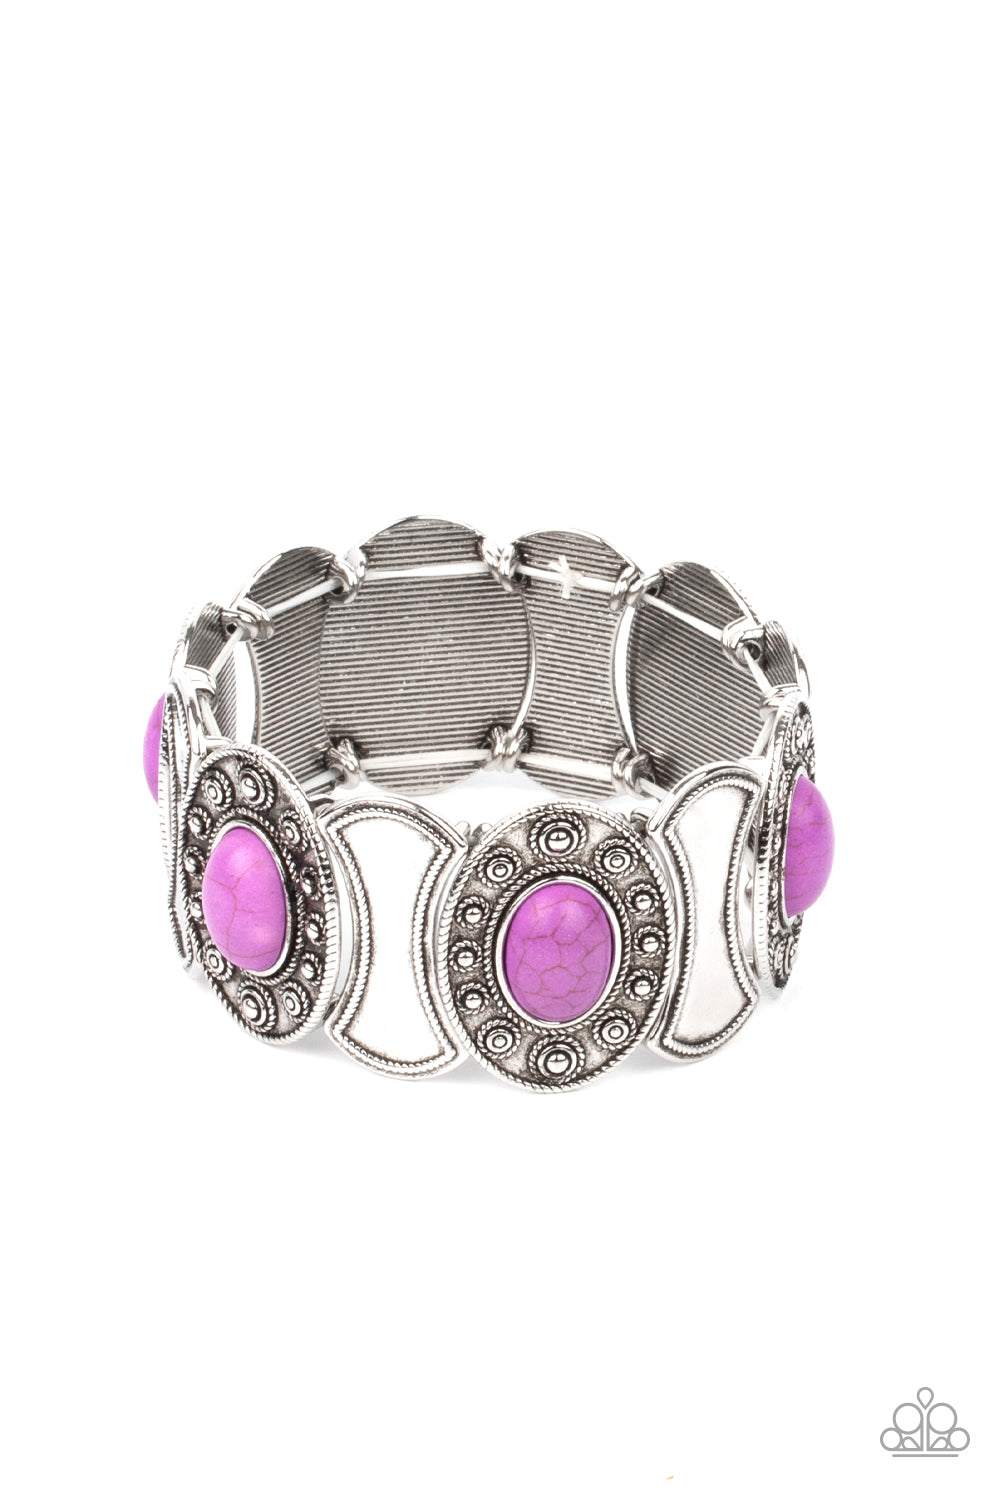 Desert Relic - Purple Bracelet freeshipping - JewLz4u Gemstone Gallery